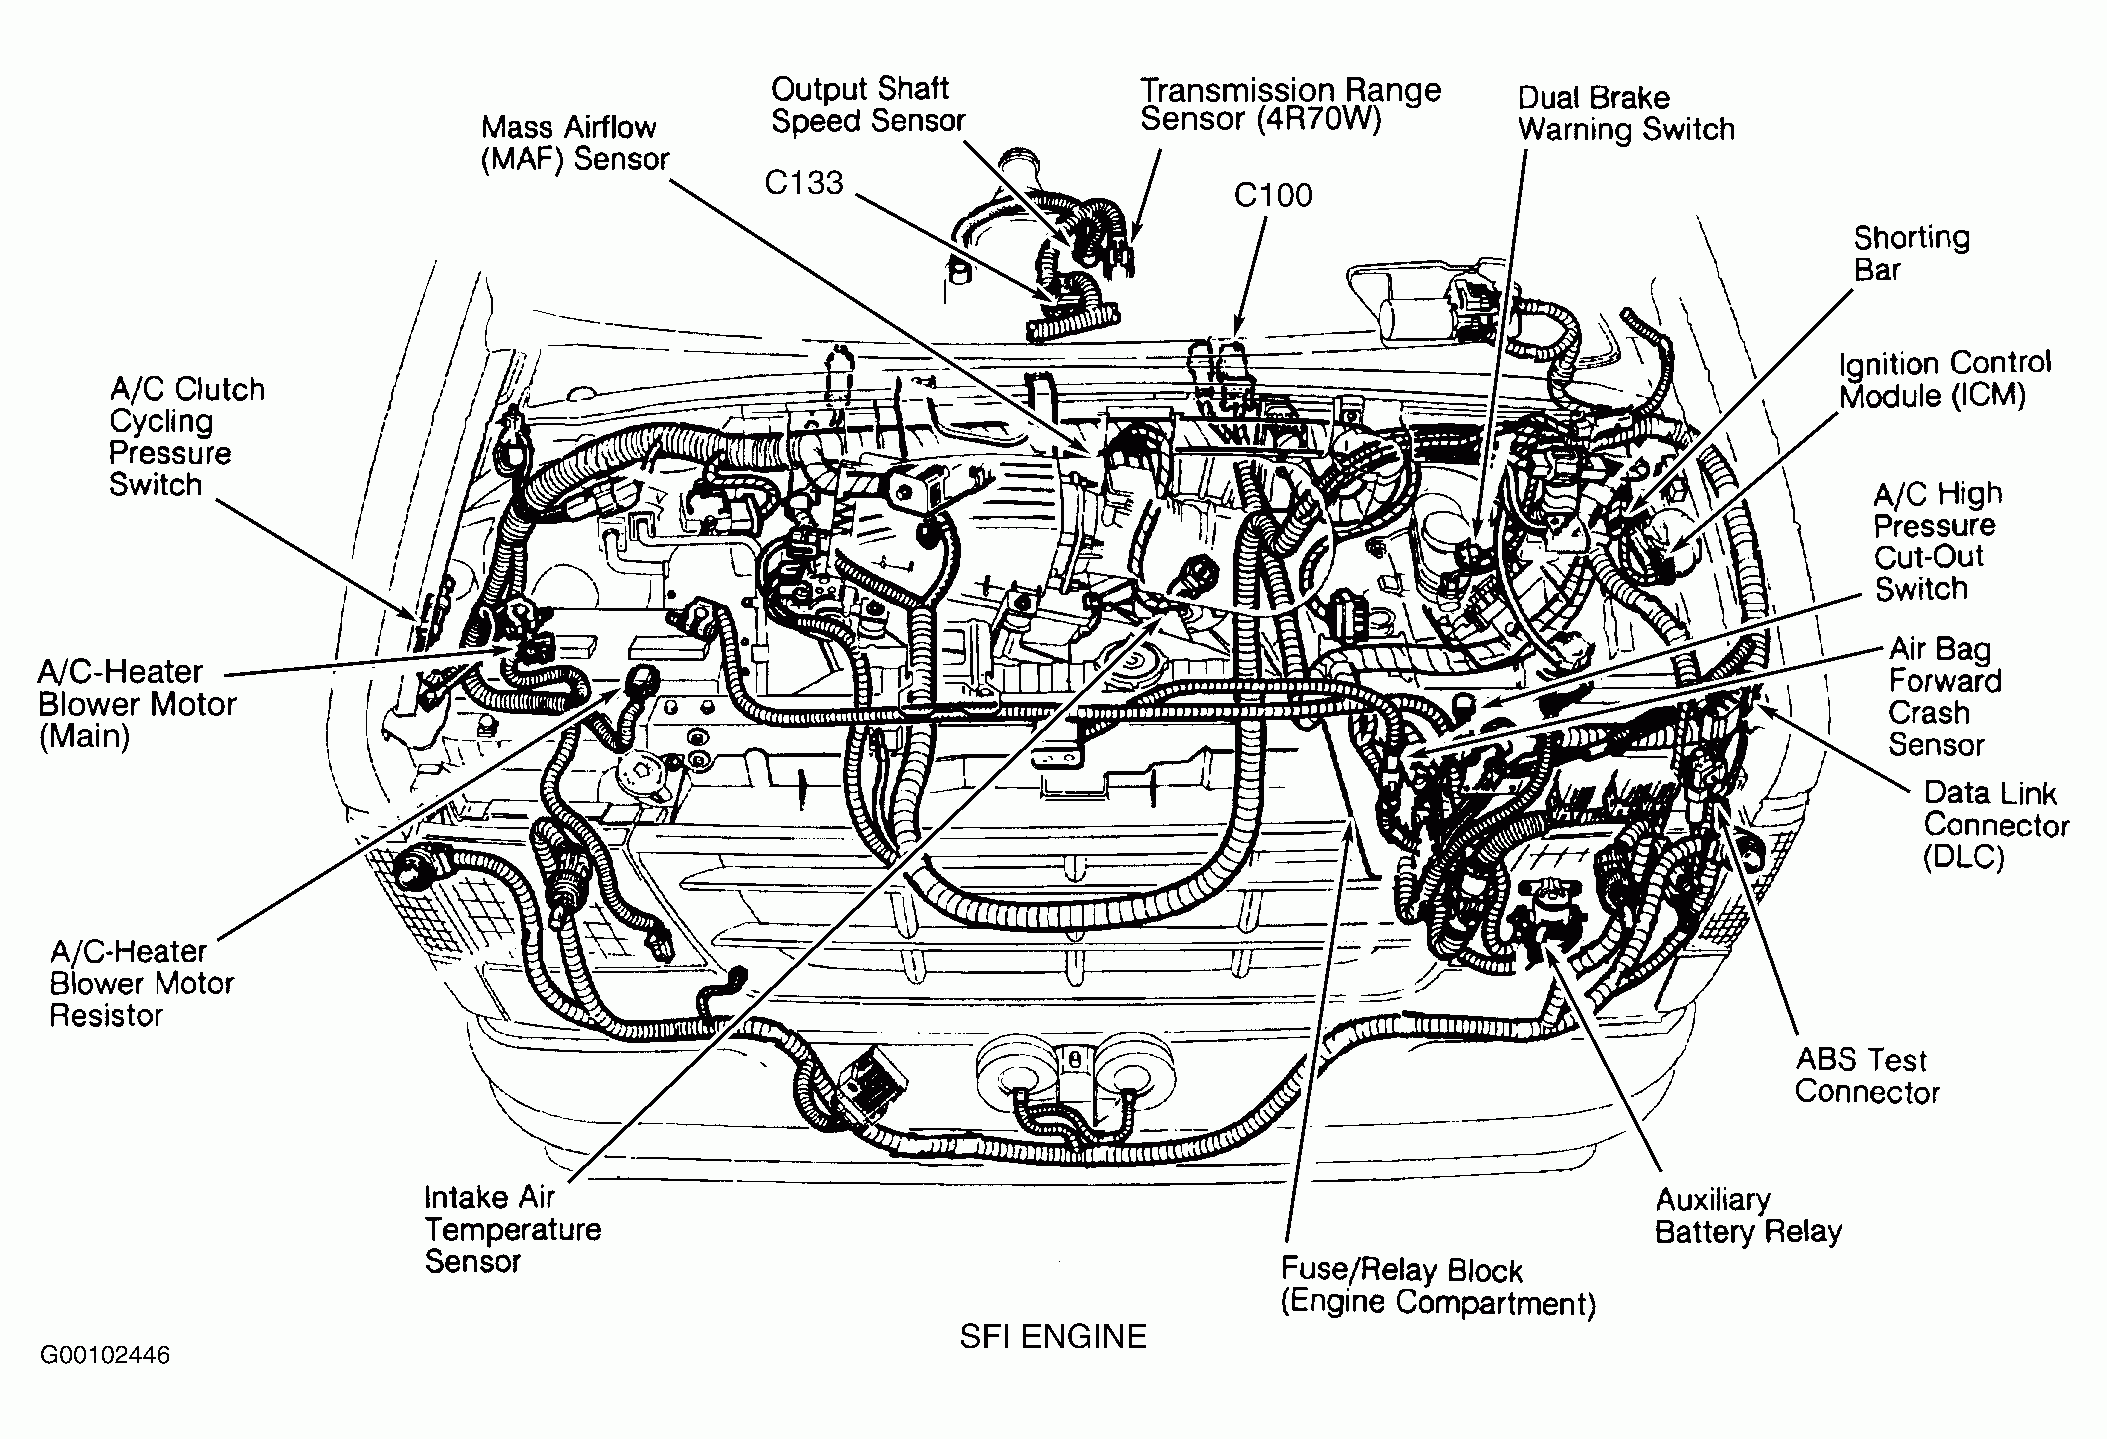 Diagram] 1974 Ford F100 460 Engine Diagram Full Version Hd